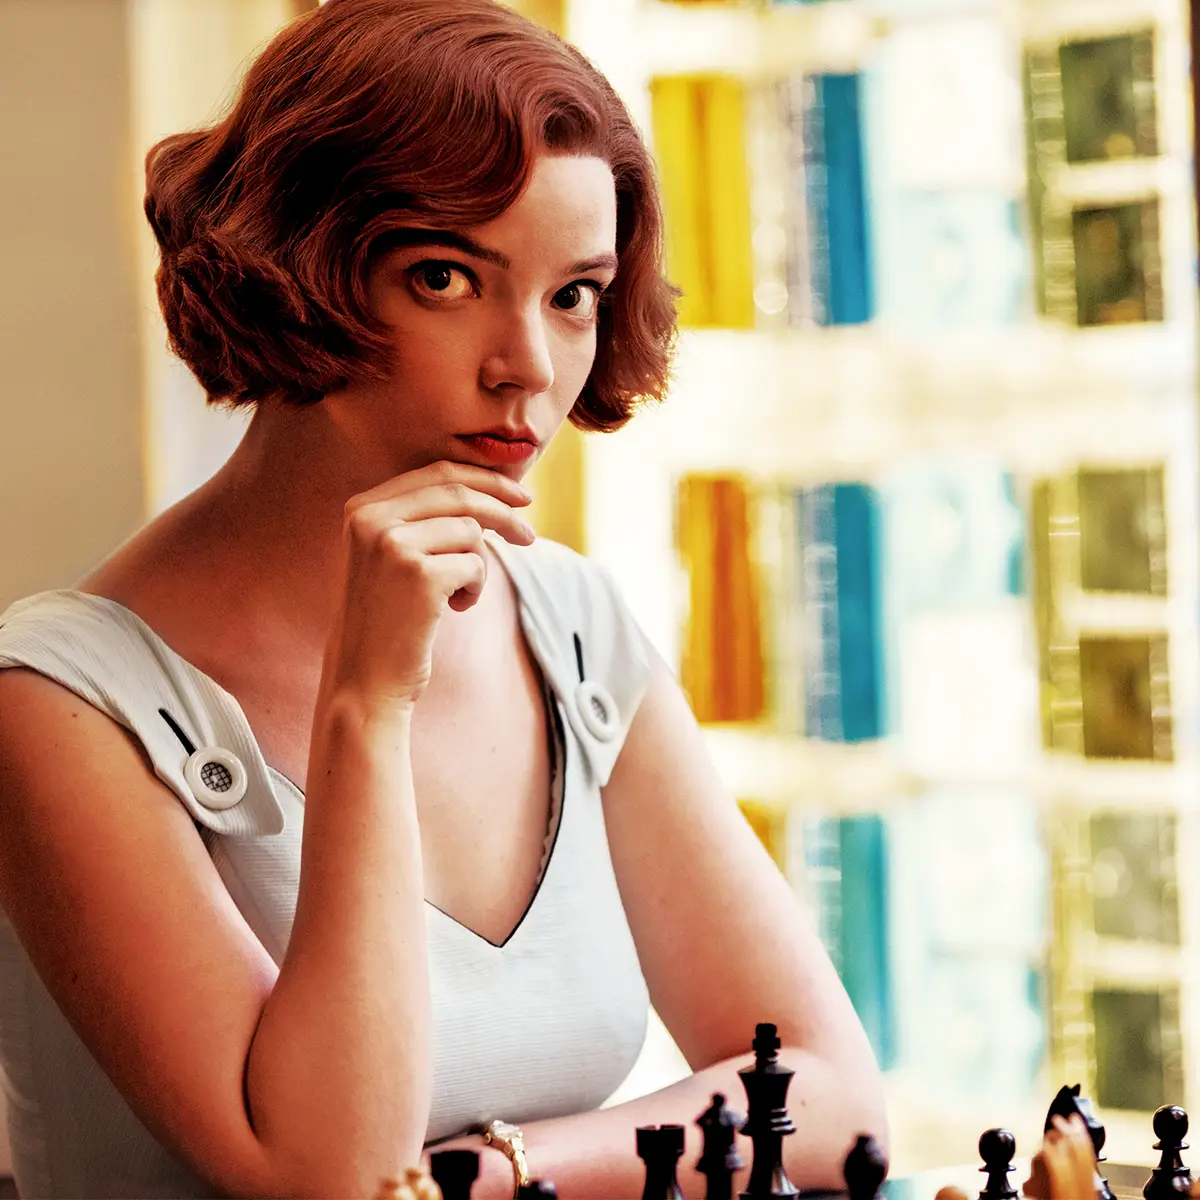 Gambito de Dama' impulsiona interesse pelo xadrez e promove uma